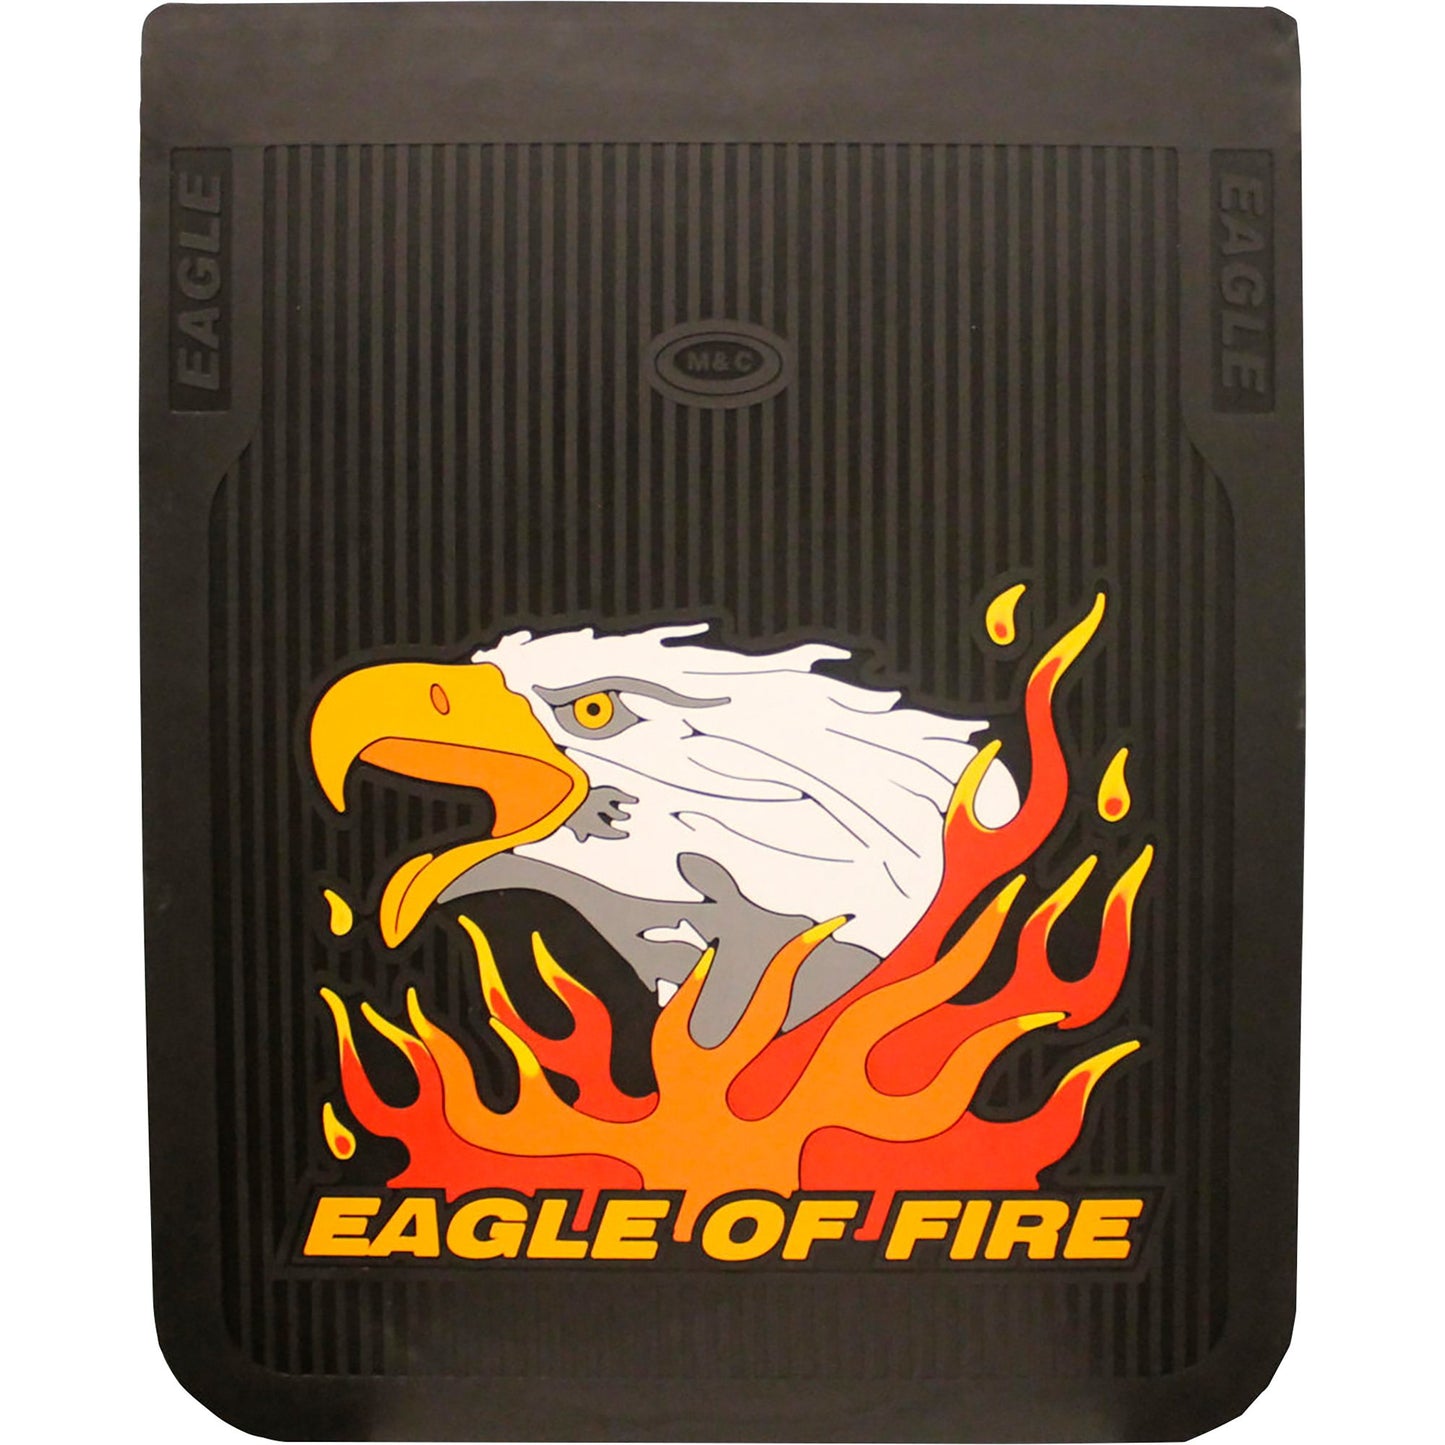 Eagle of Fire Vertical Mud Flaps (2 pcs)